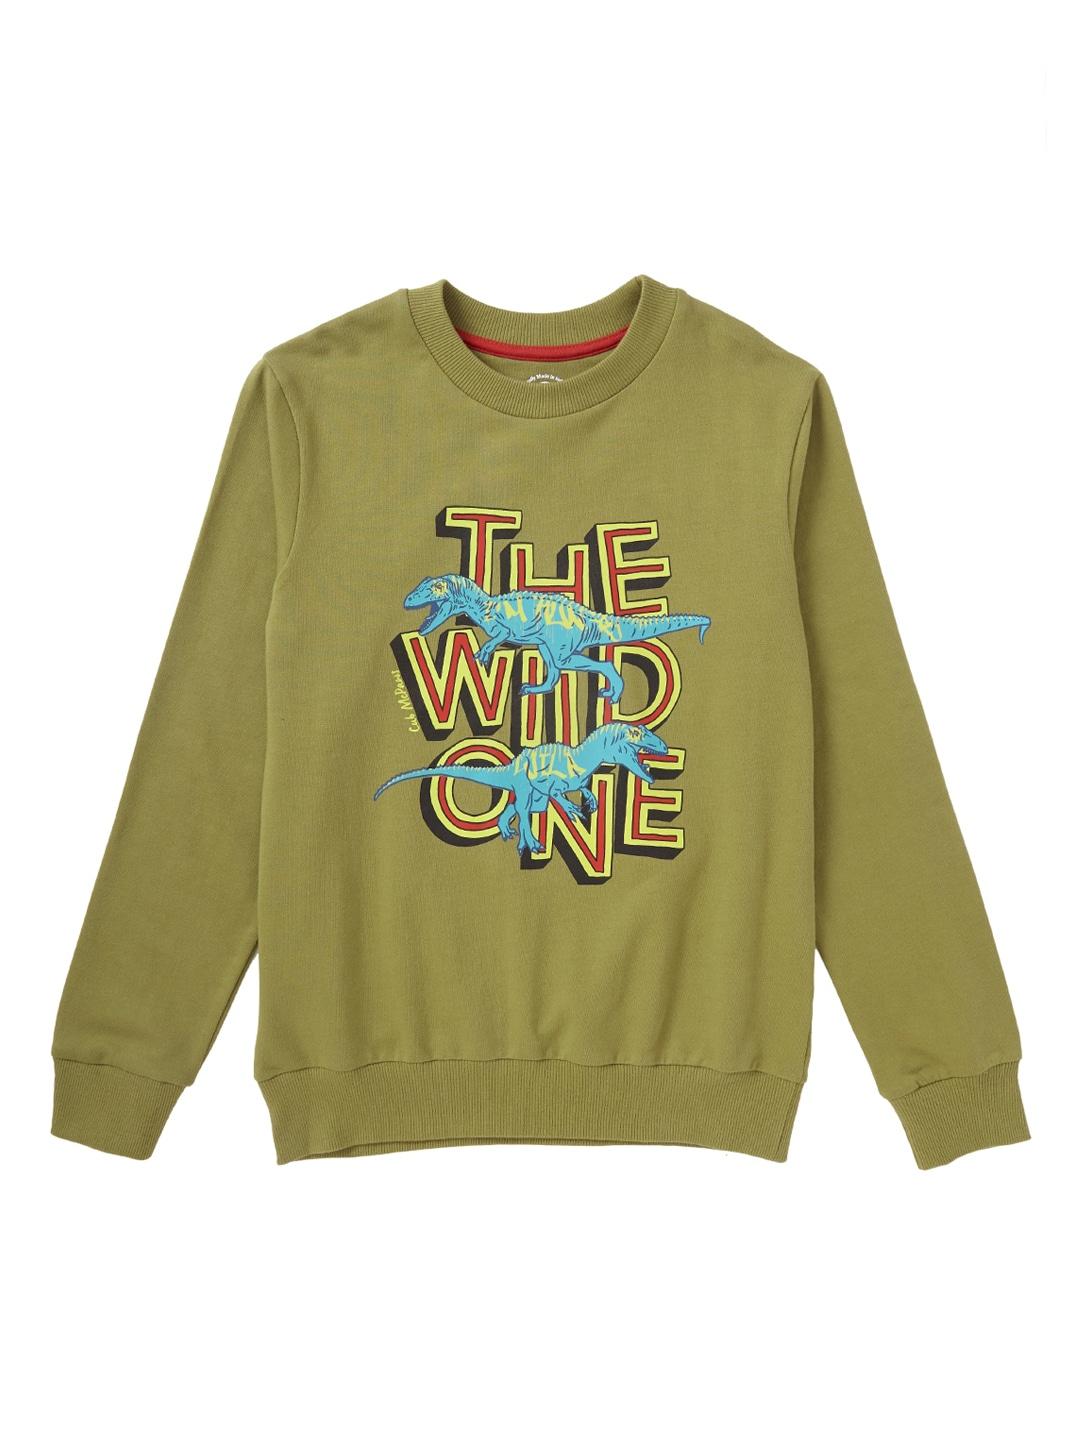 Cub McPaws Boys Olive Green Printed Sweatshirt